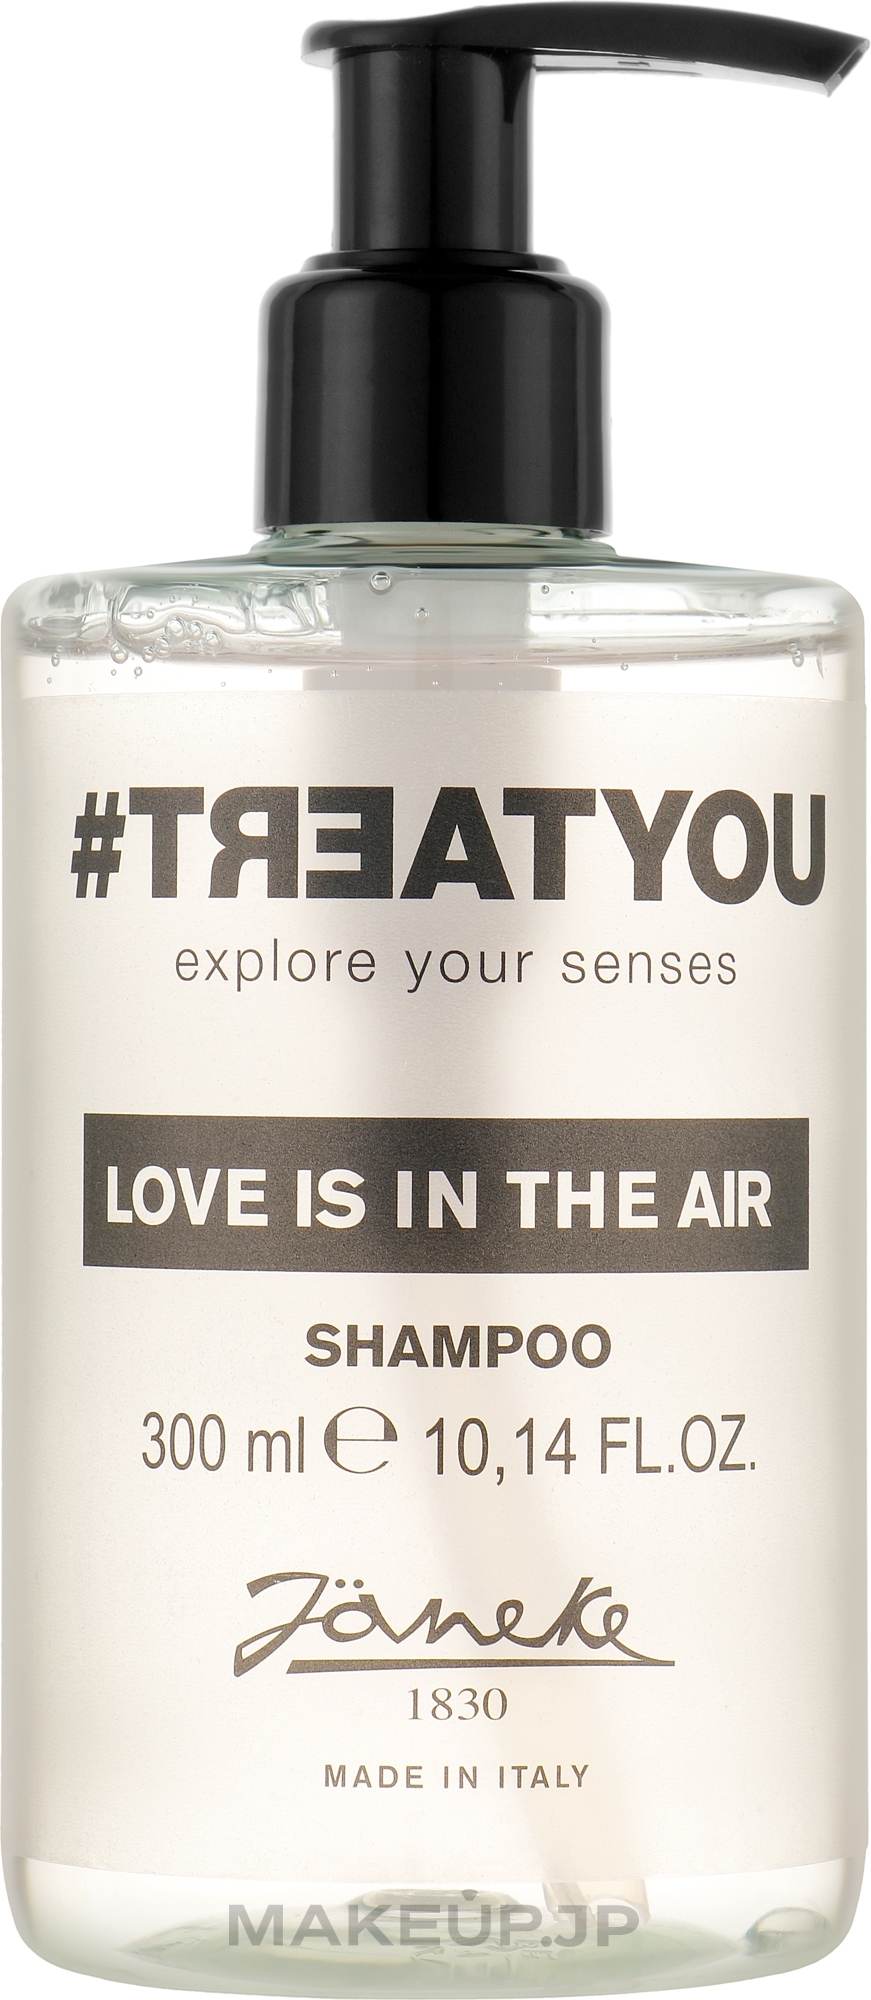 Shampoo - Janeke #Treatyou Love Is In The Air Shampoo — photo 300 ml